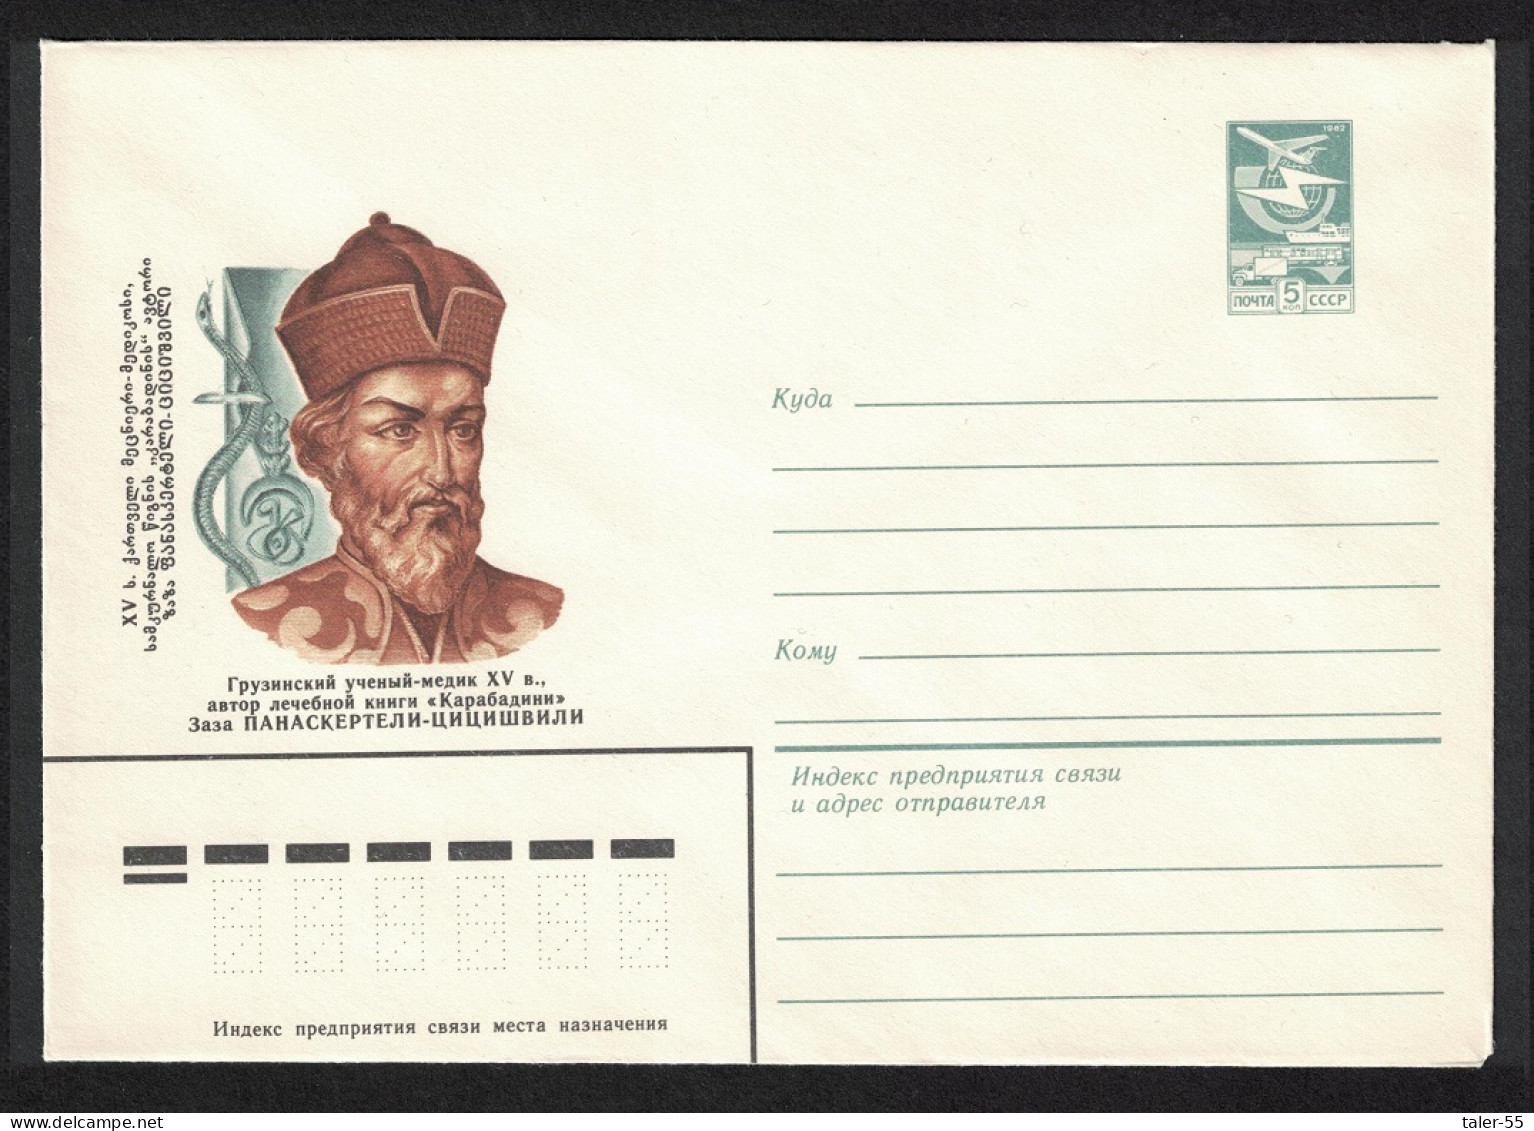 USSR Zaza Panaskerteli Great Georgian Healer Pre-paid Envelope 1980 - Gebraucht